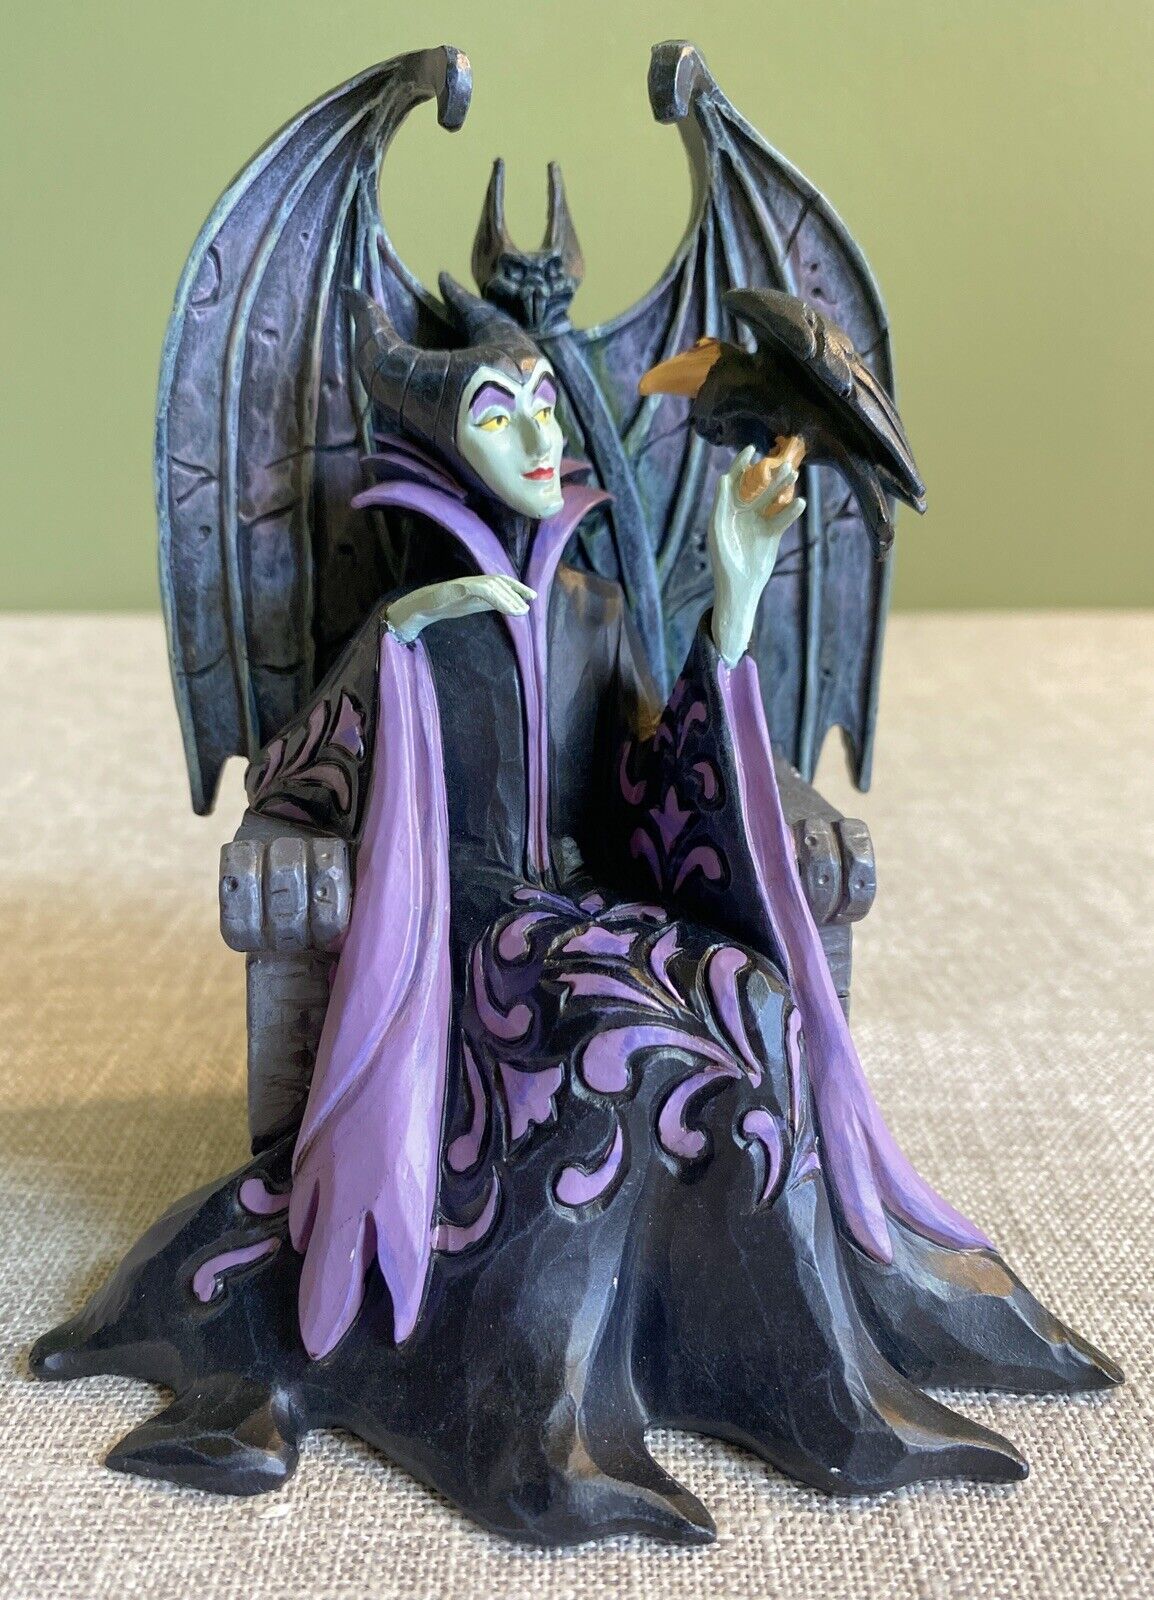 Disney Showcase Maleficent “Mistress Of Evil” Figurine 6014326